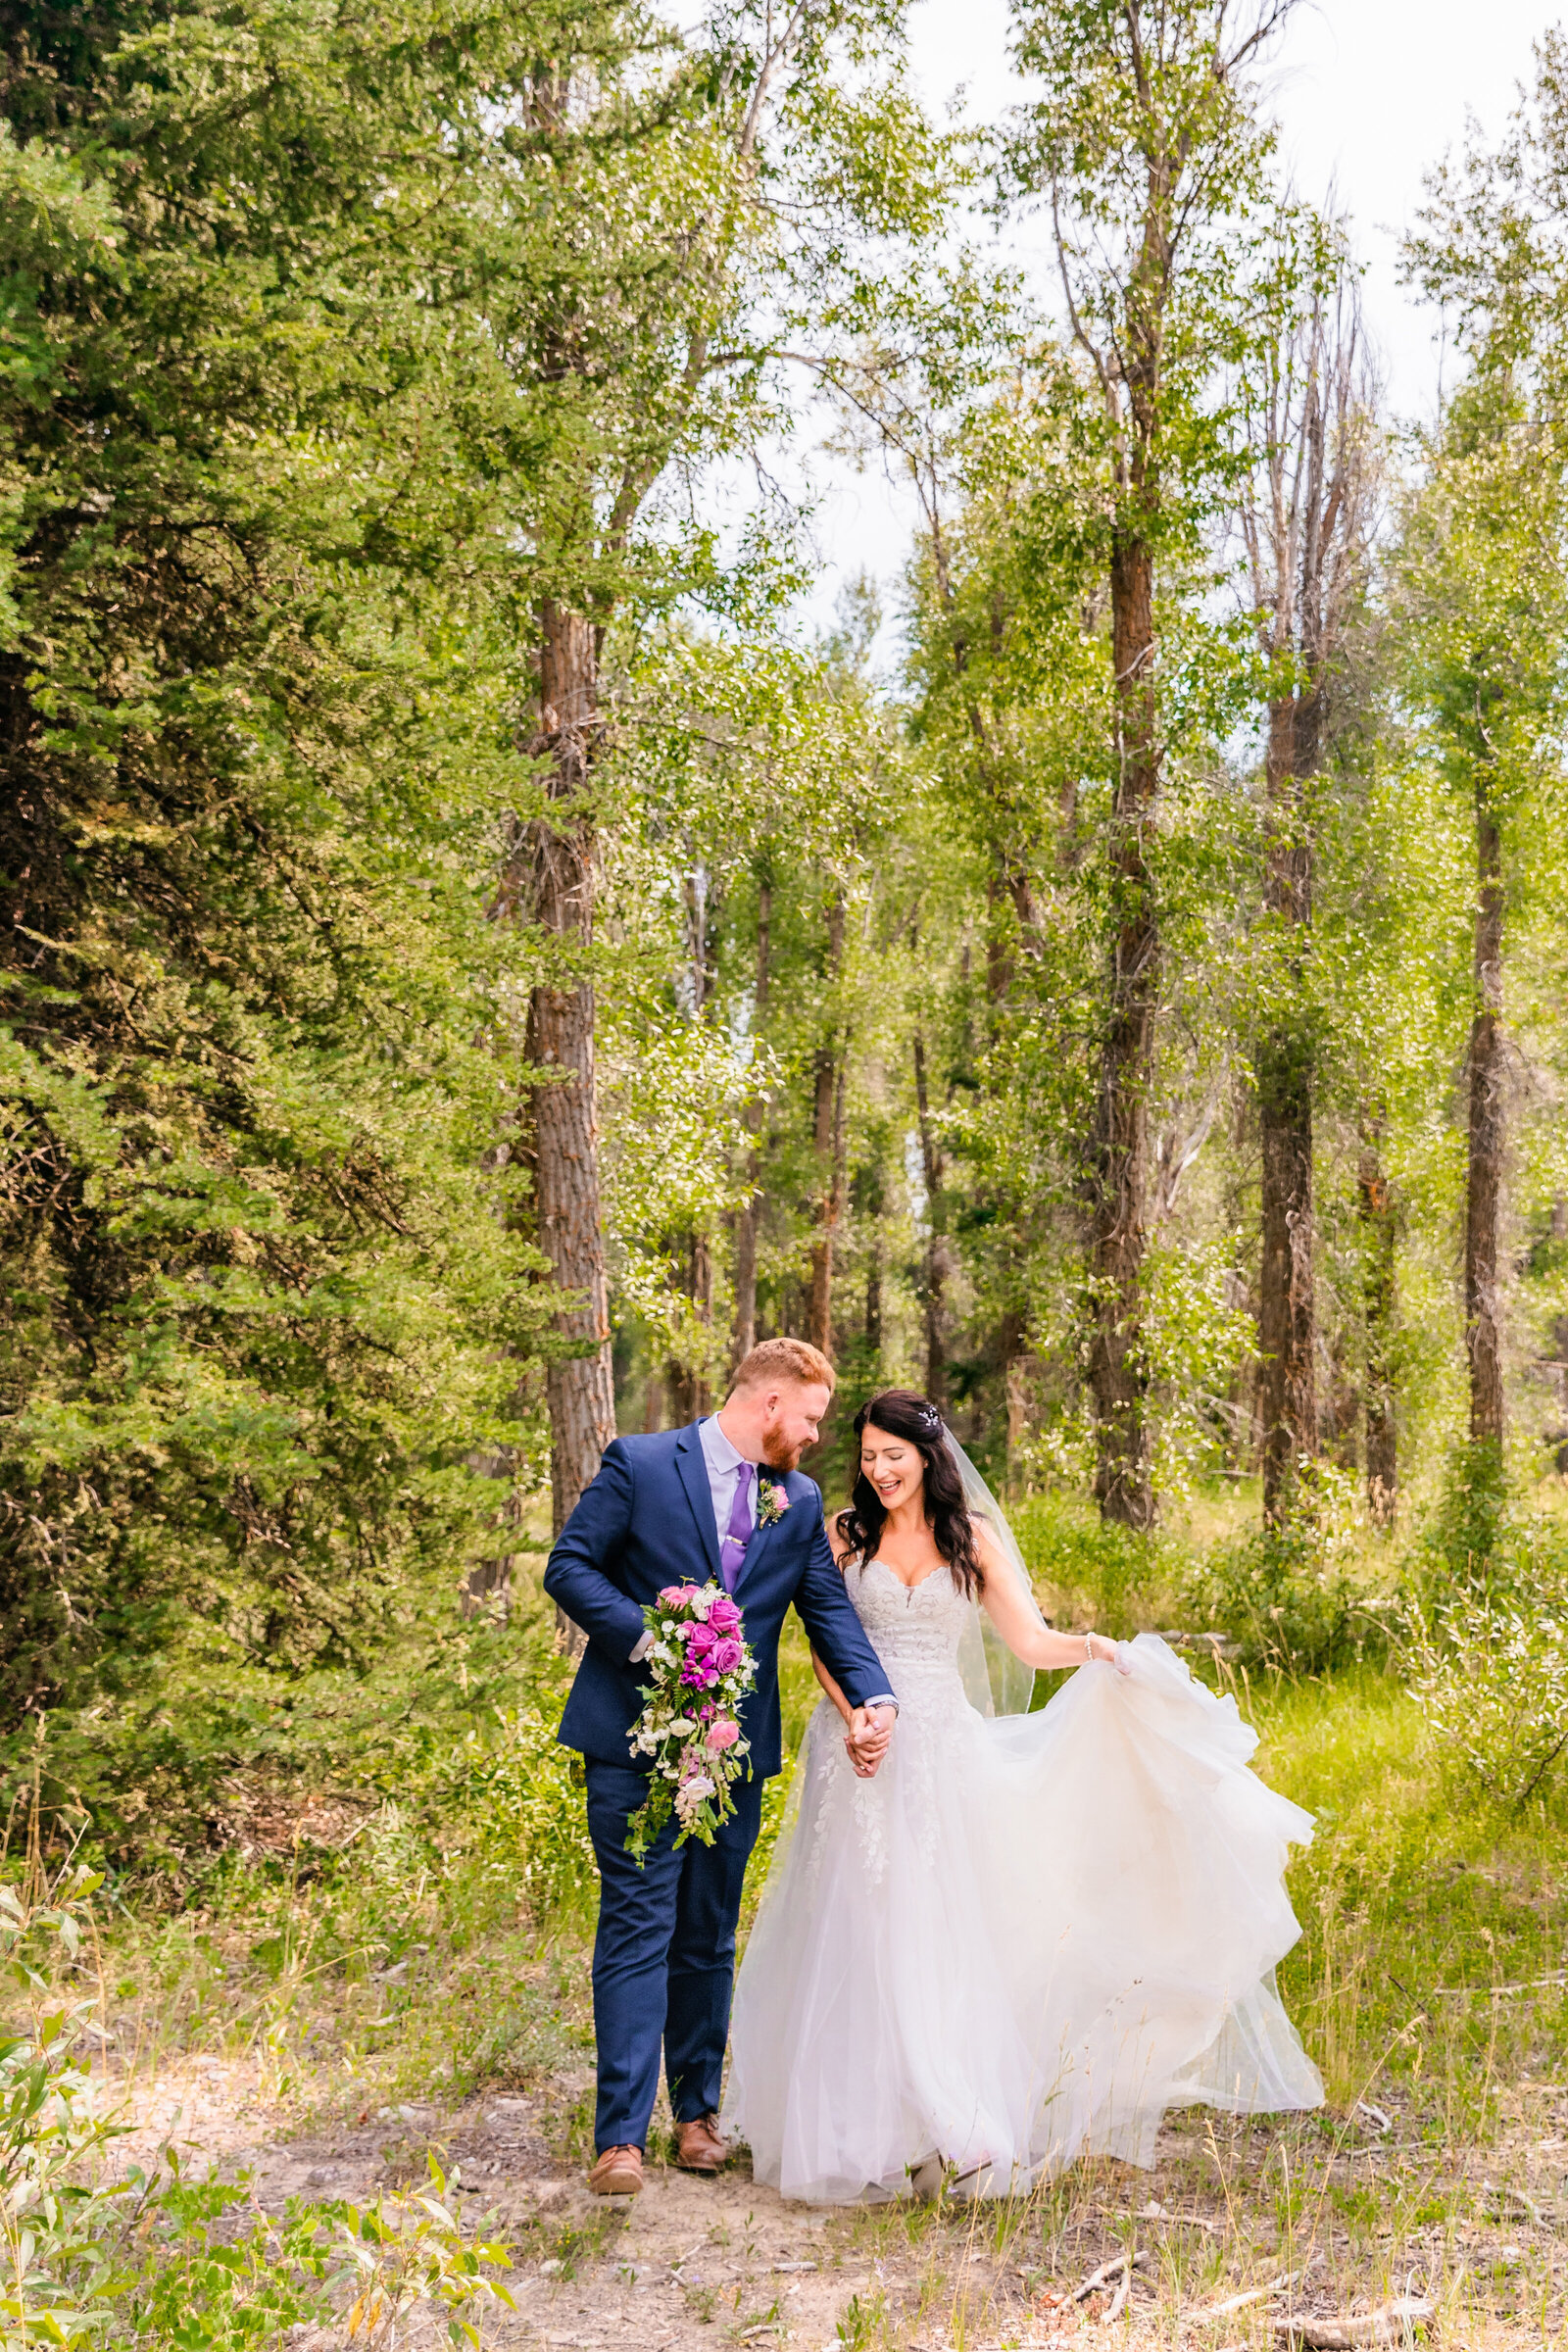 Jackson Hole photographers capture couple walking through forest during bridal portraits